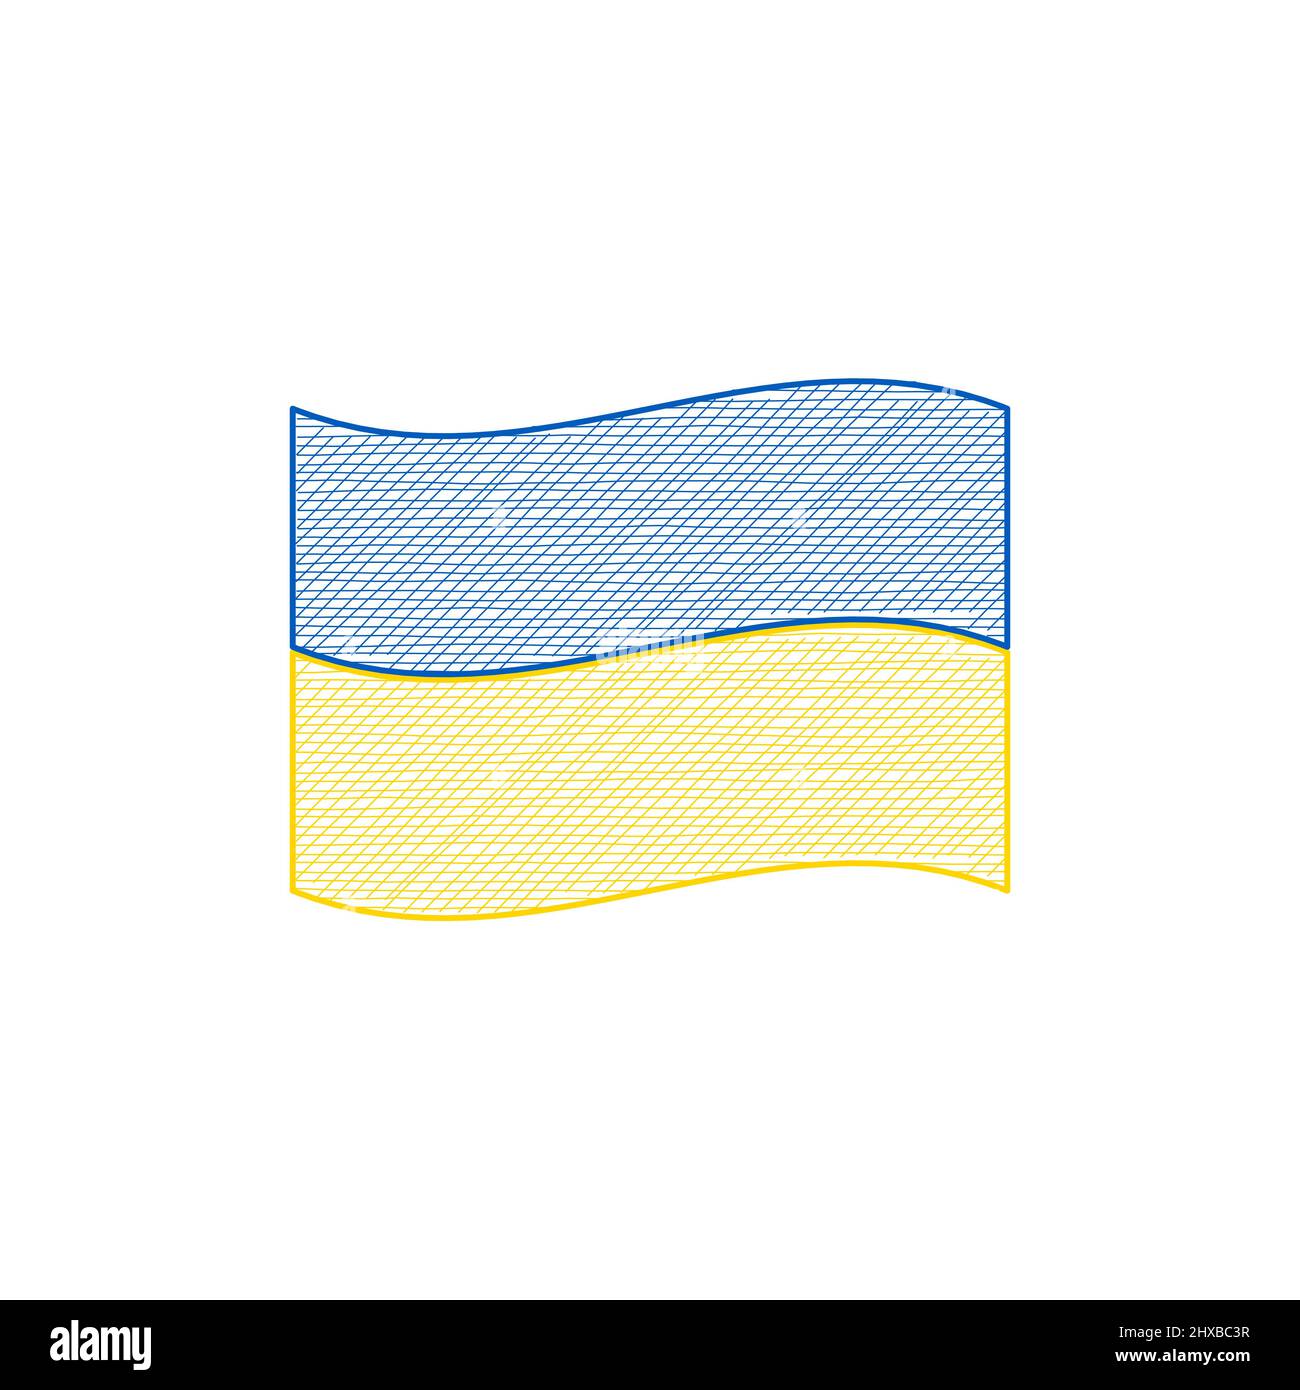 Minimalist hand drawn lines Ukrainian Flag. Stock vector illustration isolated on white background. Stock Vector